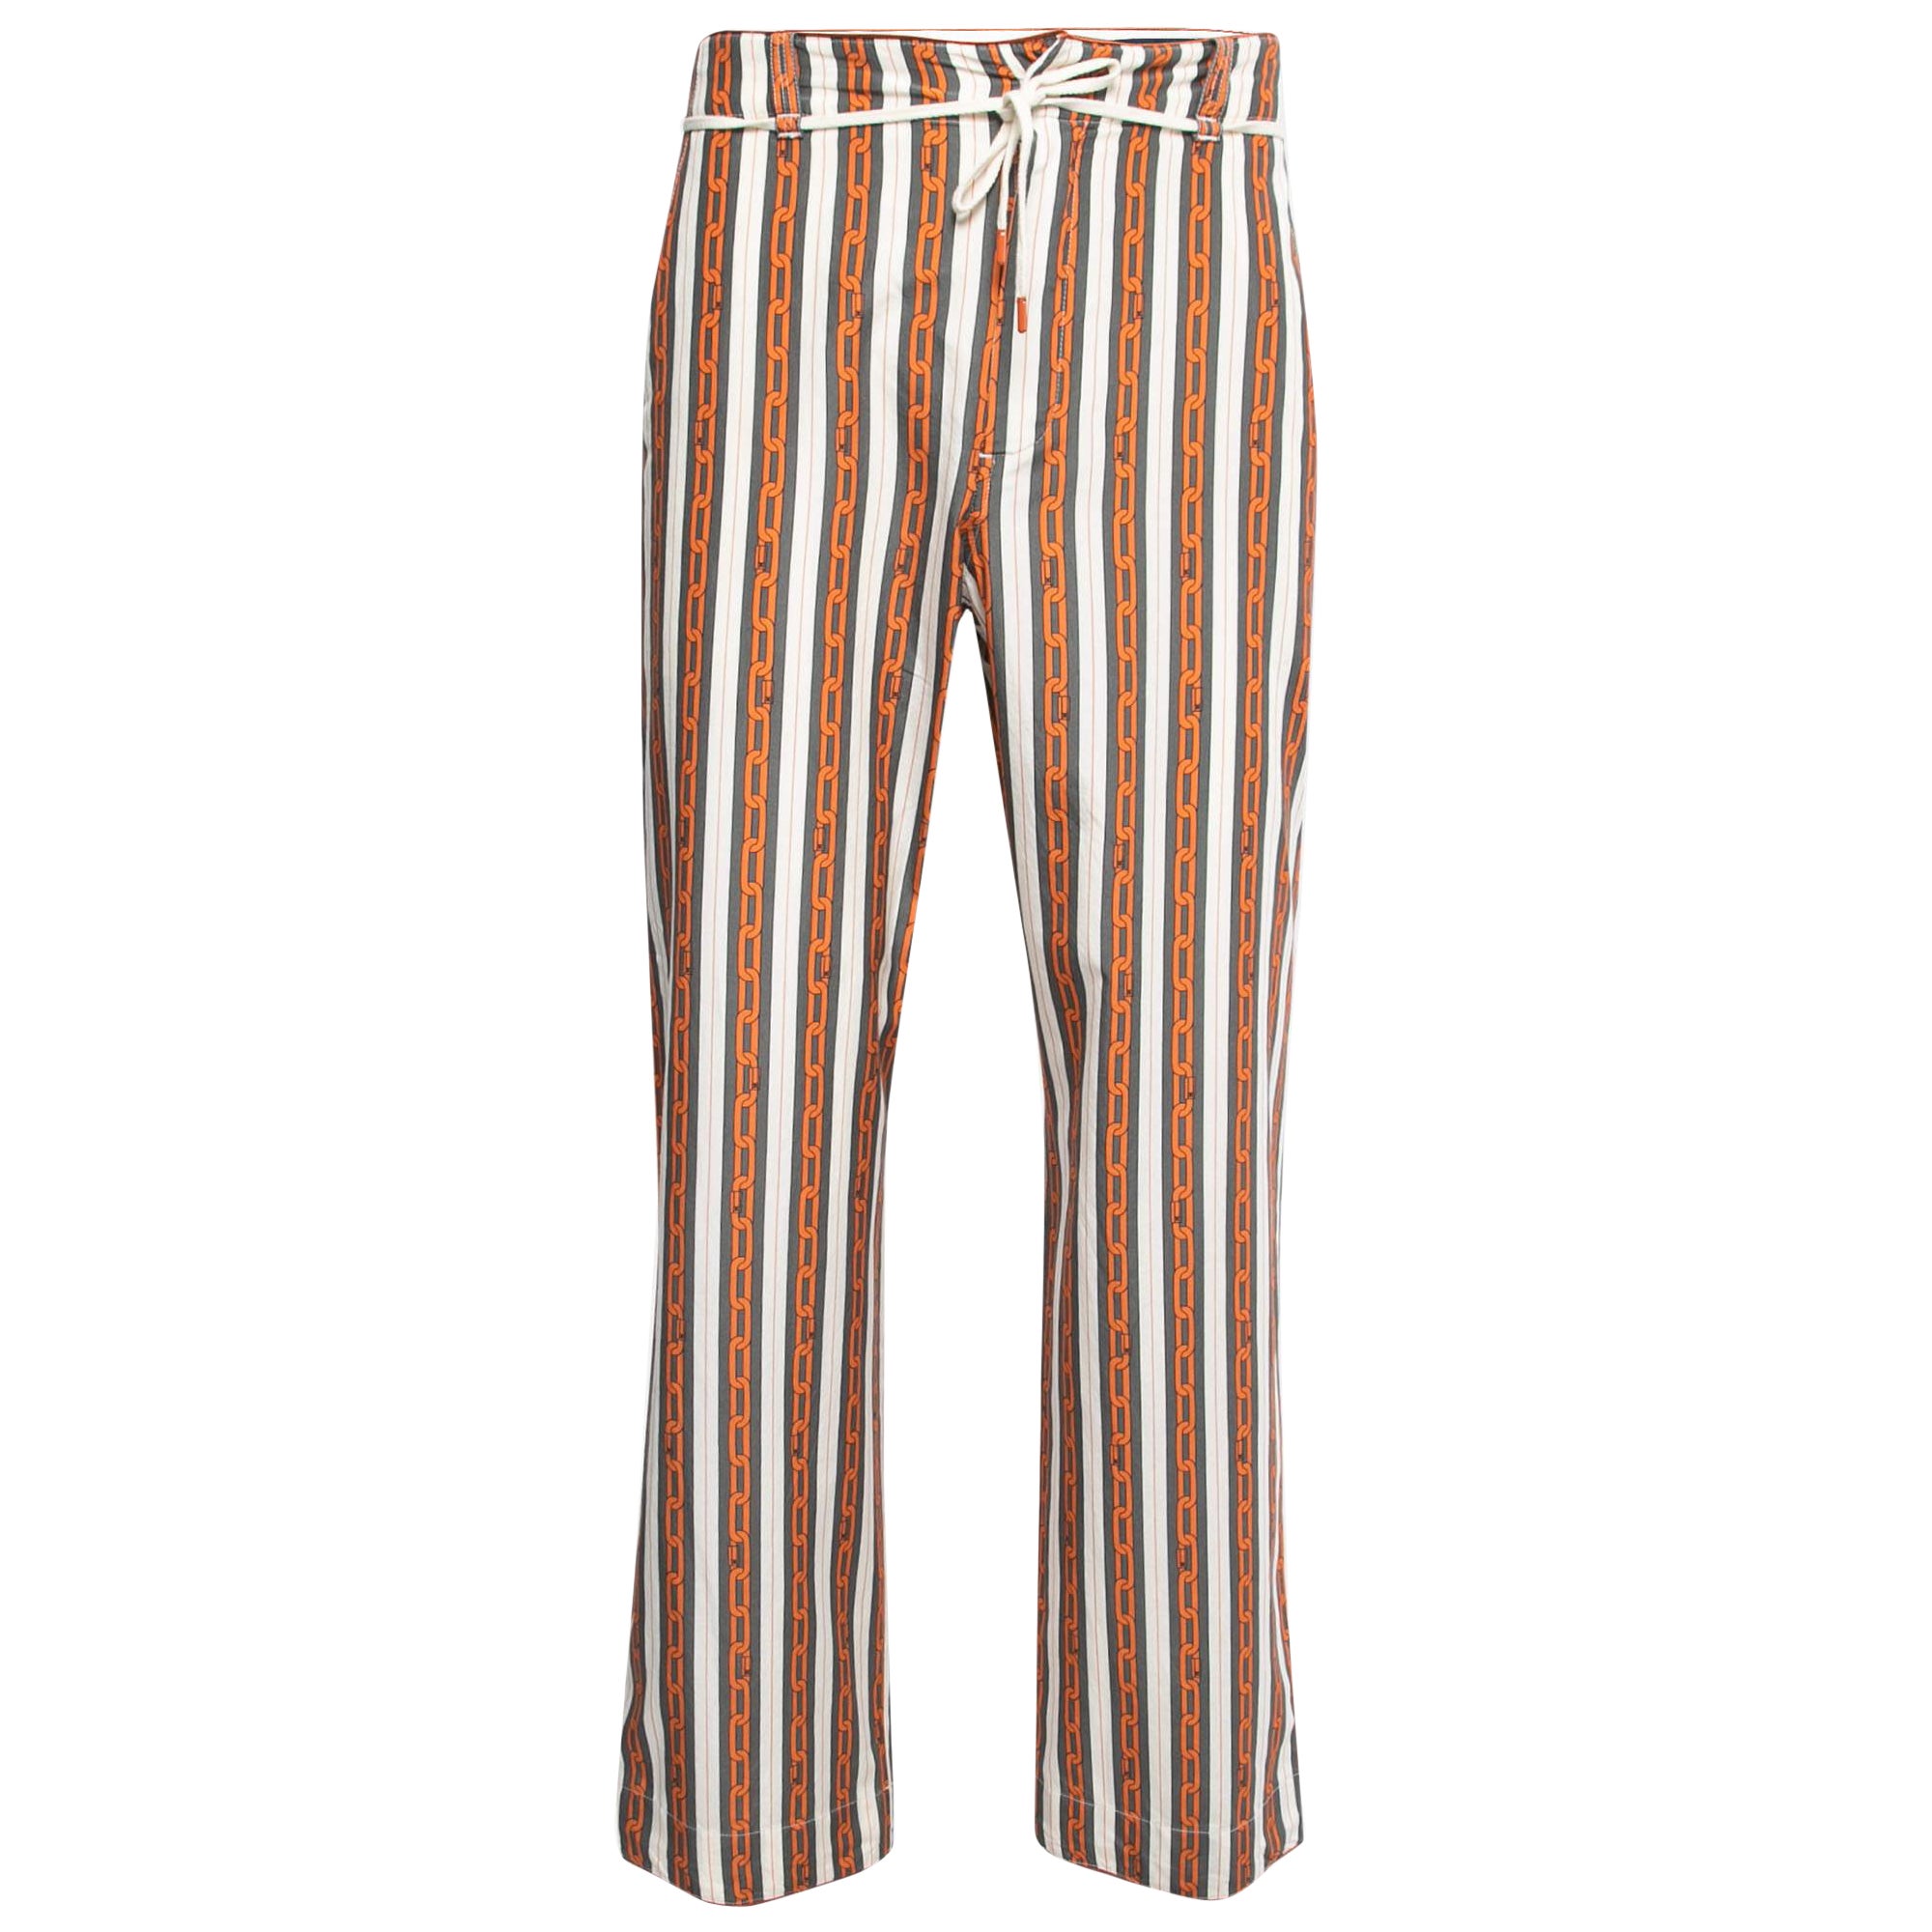 Louis Vuitton Print Pants - 11 For Sale on 1stDibs